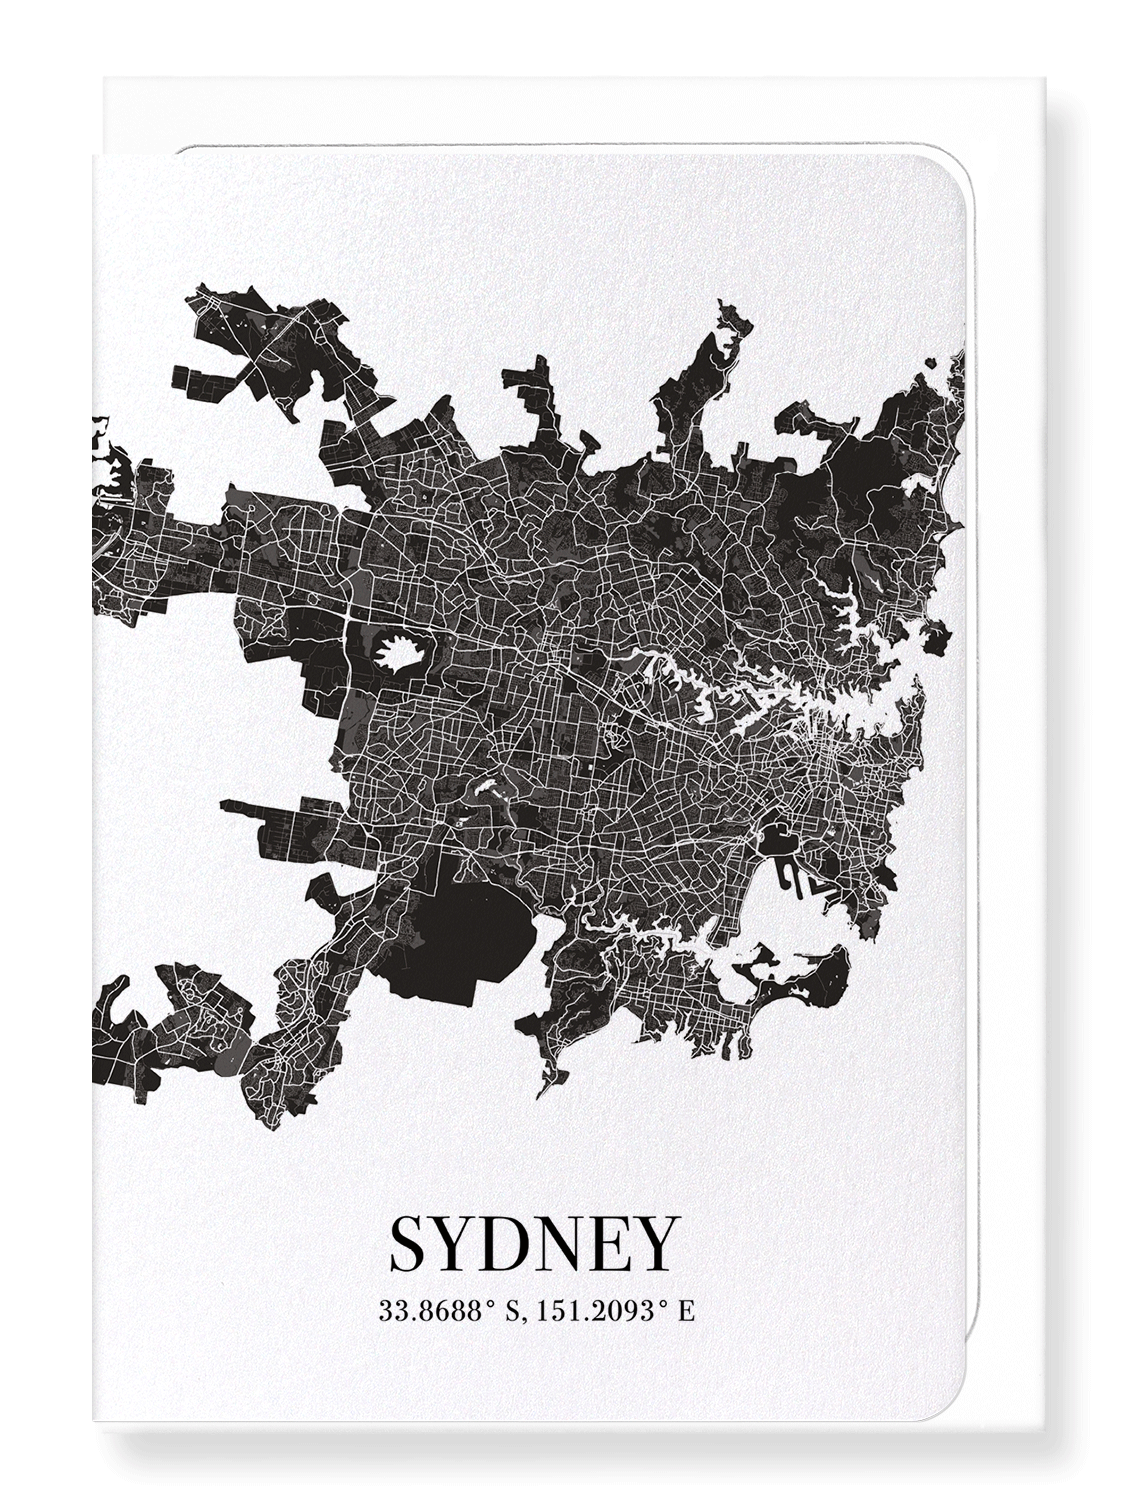 SYDNEY CUTOUT: Map Cutout Greeting Card